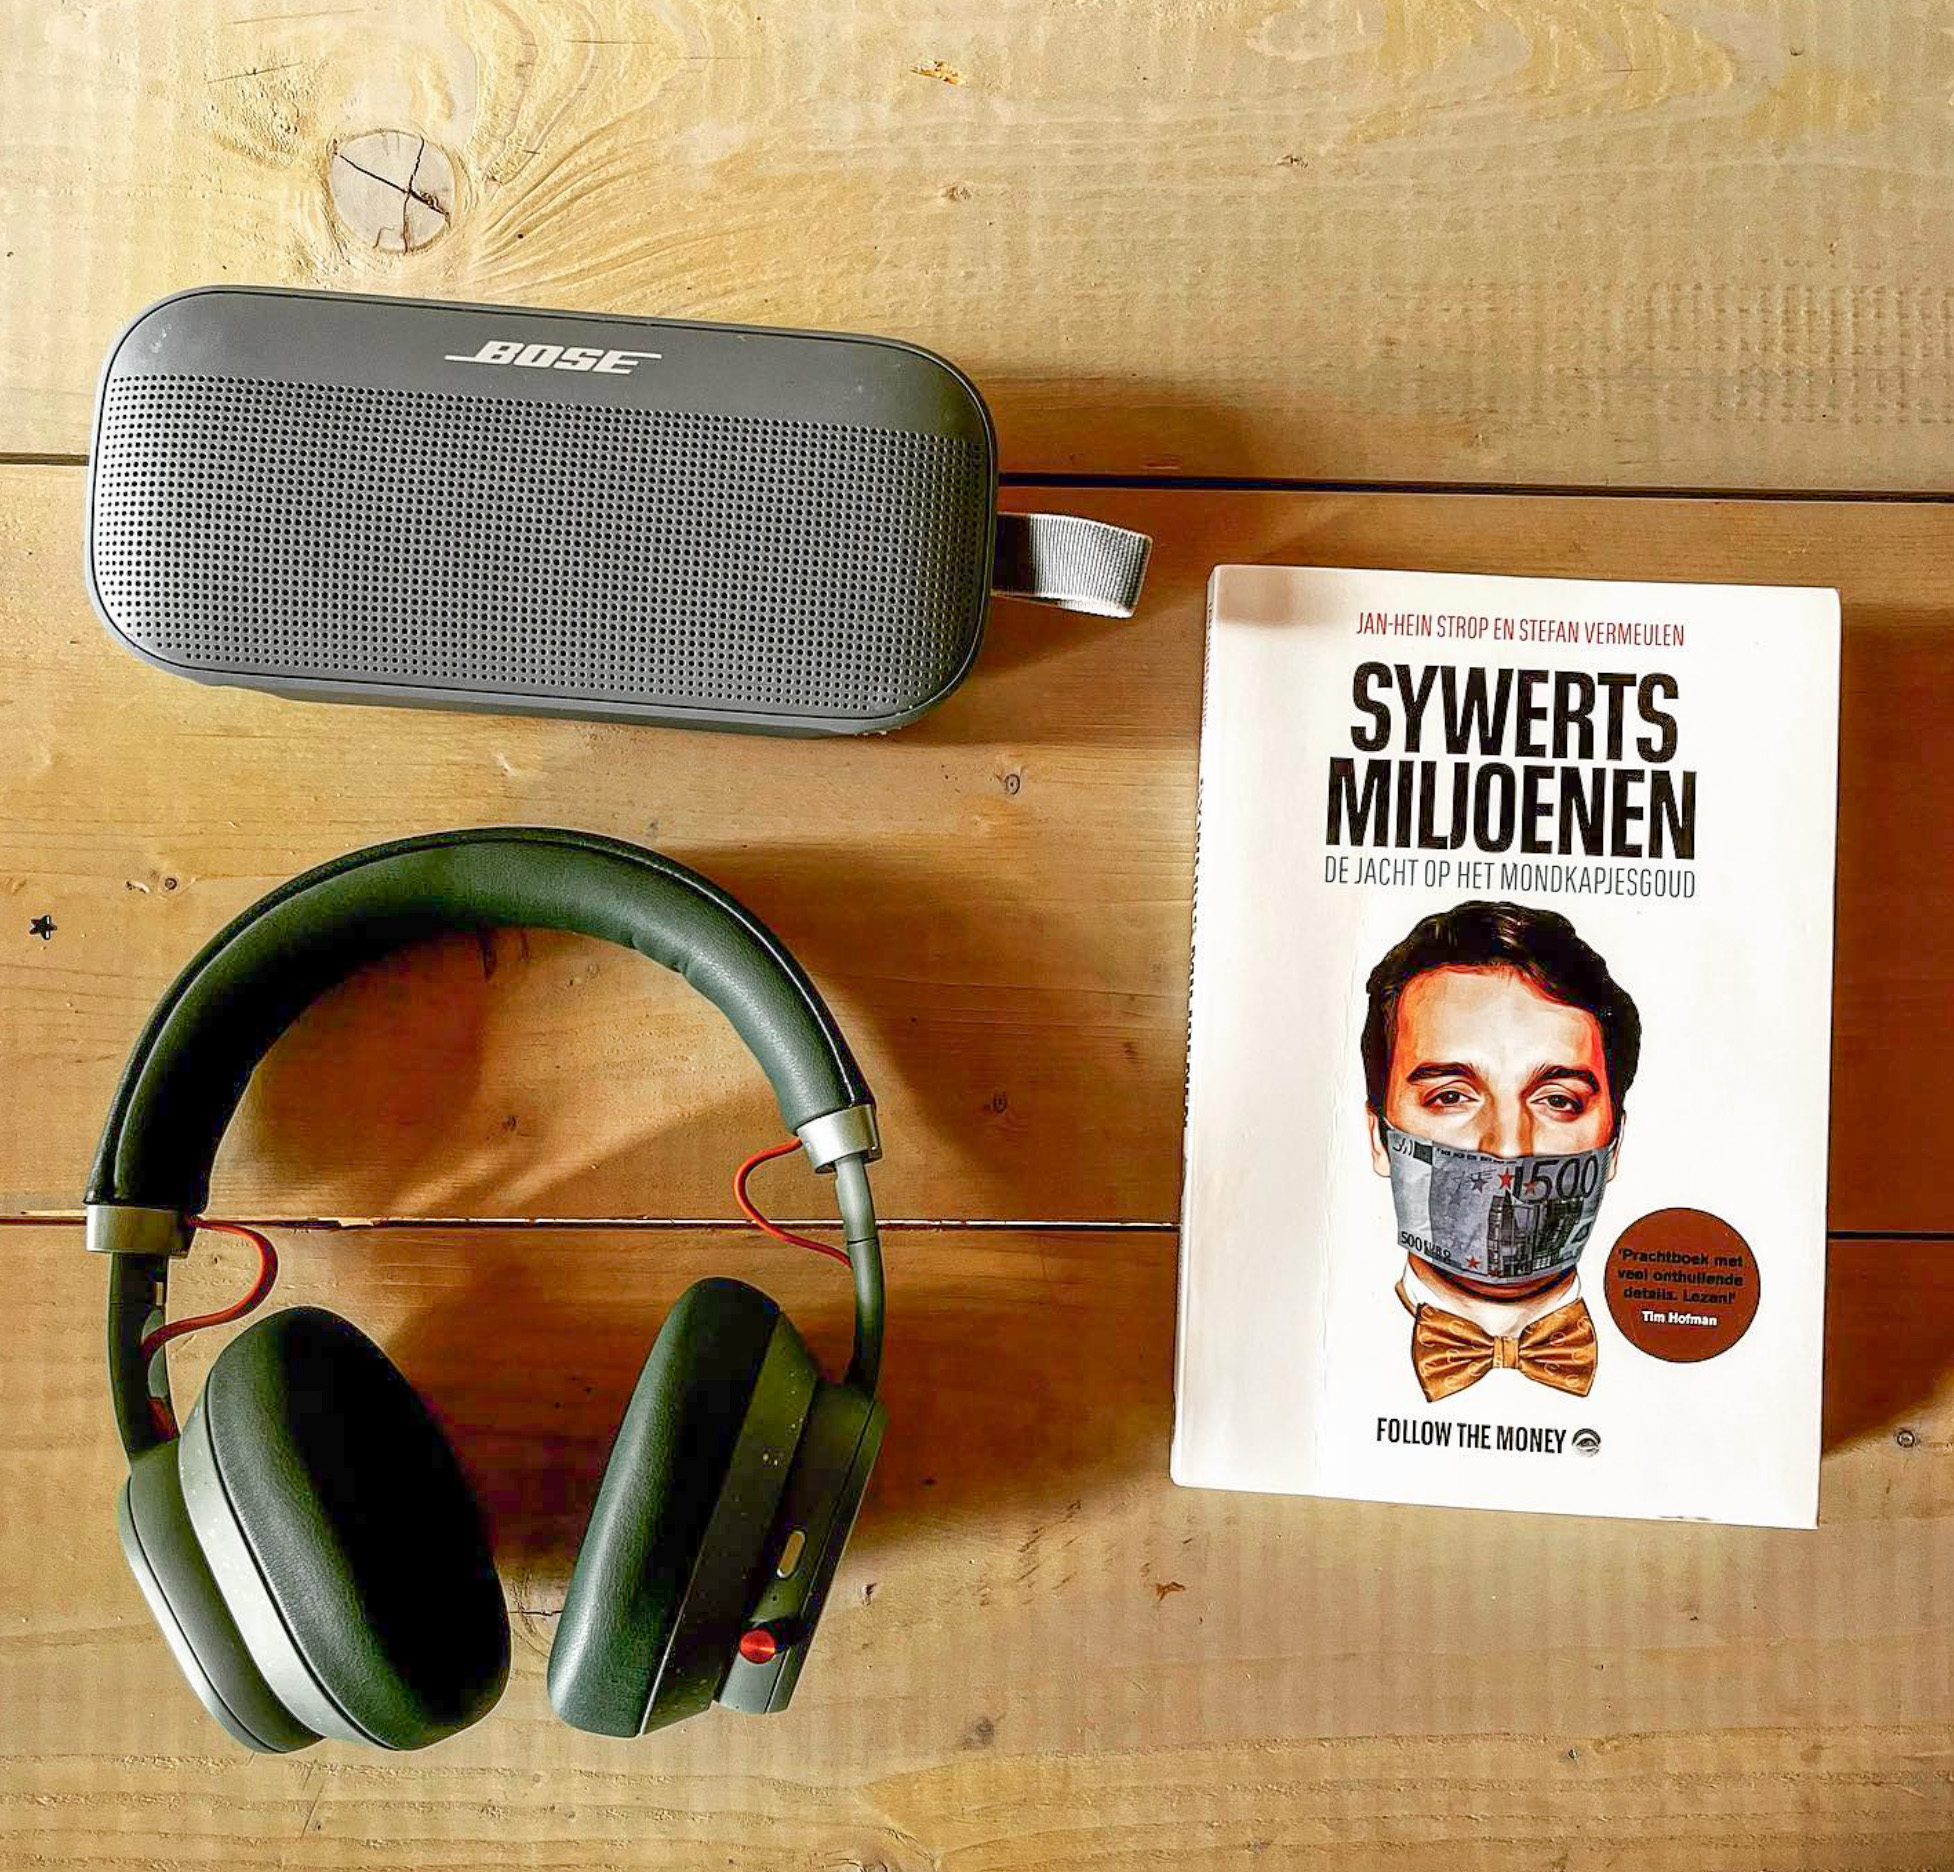 Fairbuds XL, Bose Soundlink and the book Sywerts Miljoenen